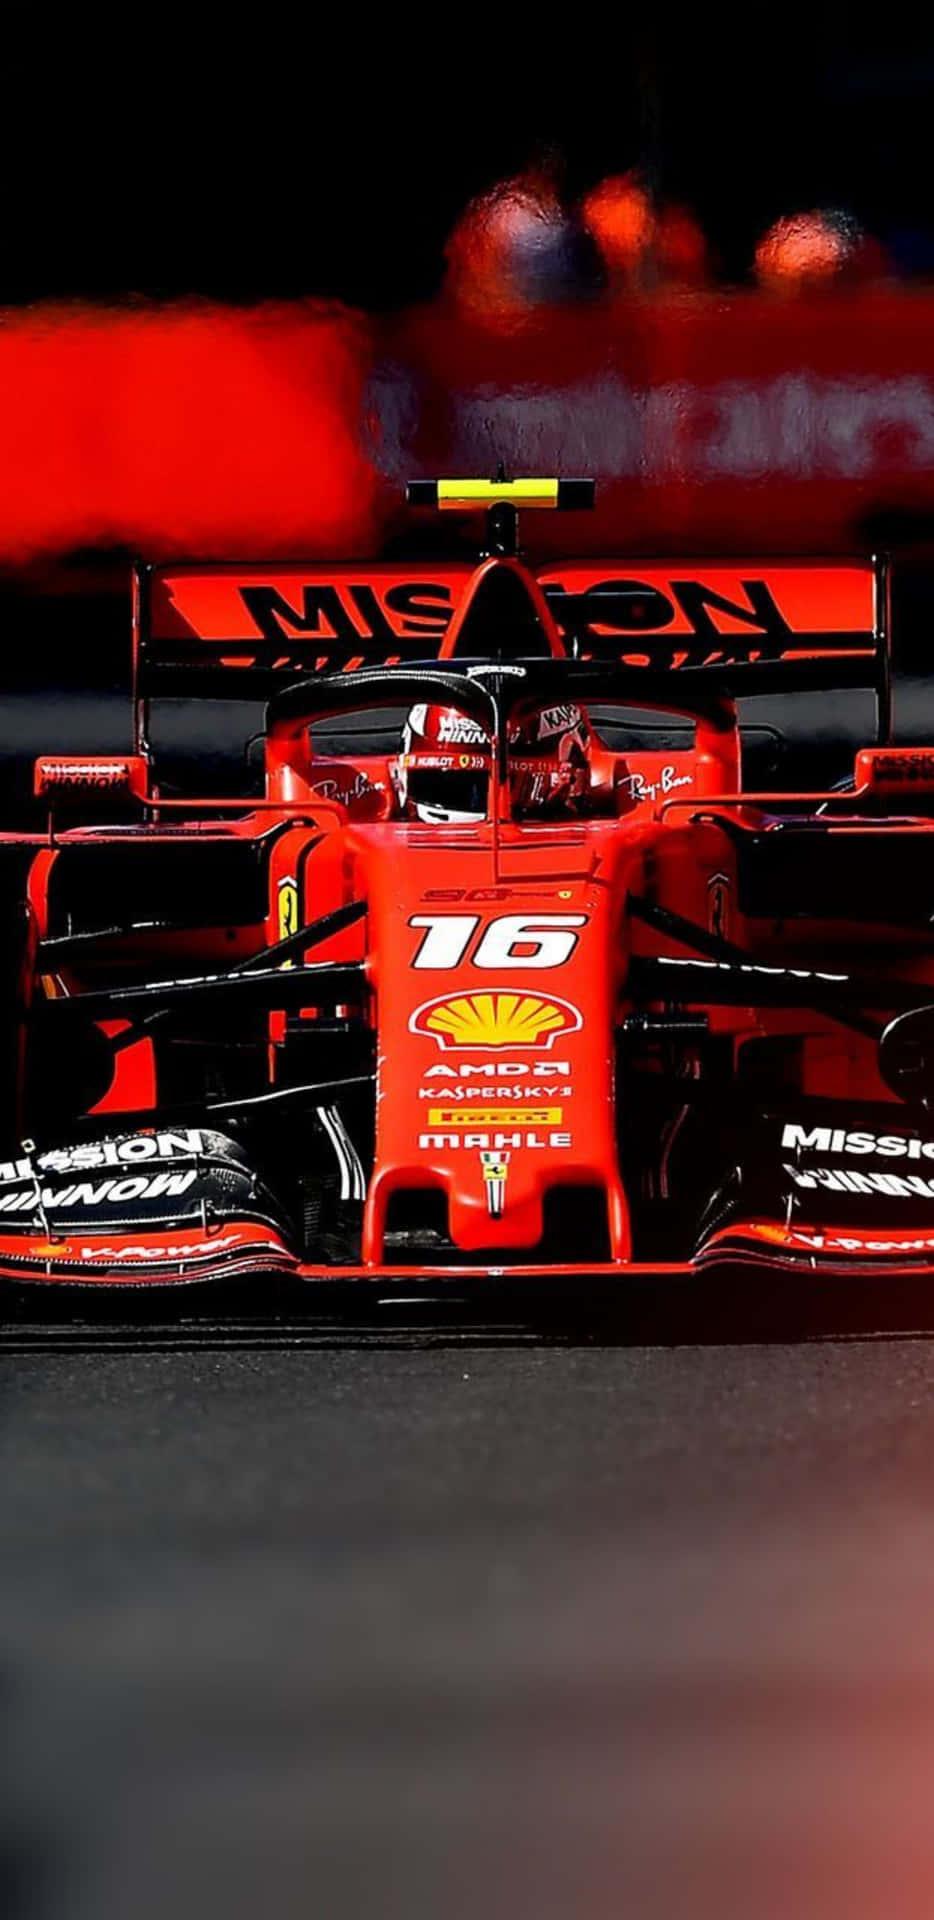 Ferrari F1 Car Driving On A Track